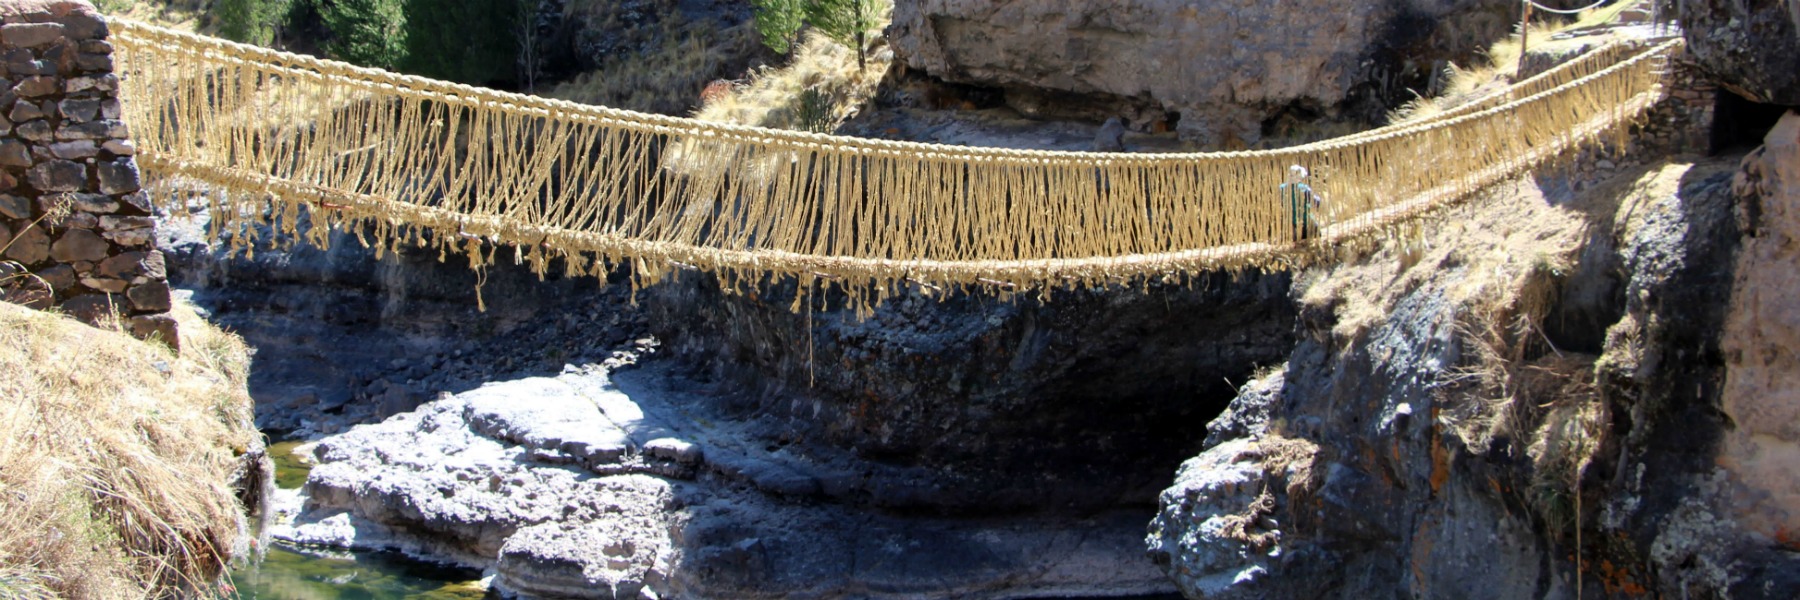 Video. WATCH: Rope bridges preserving the Inca heritage